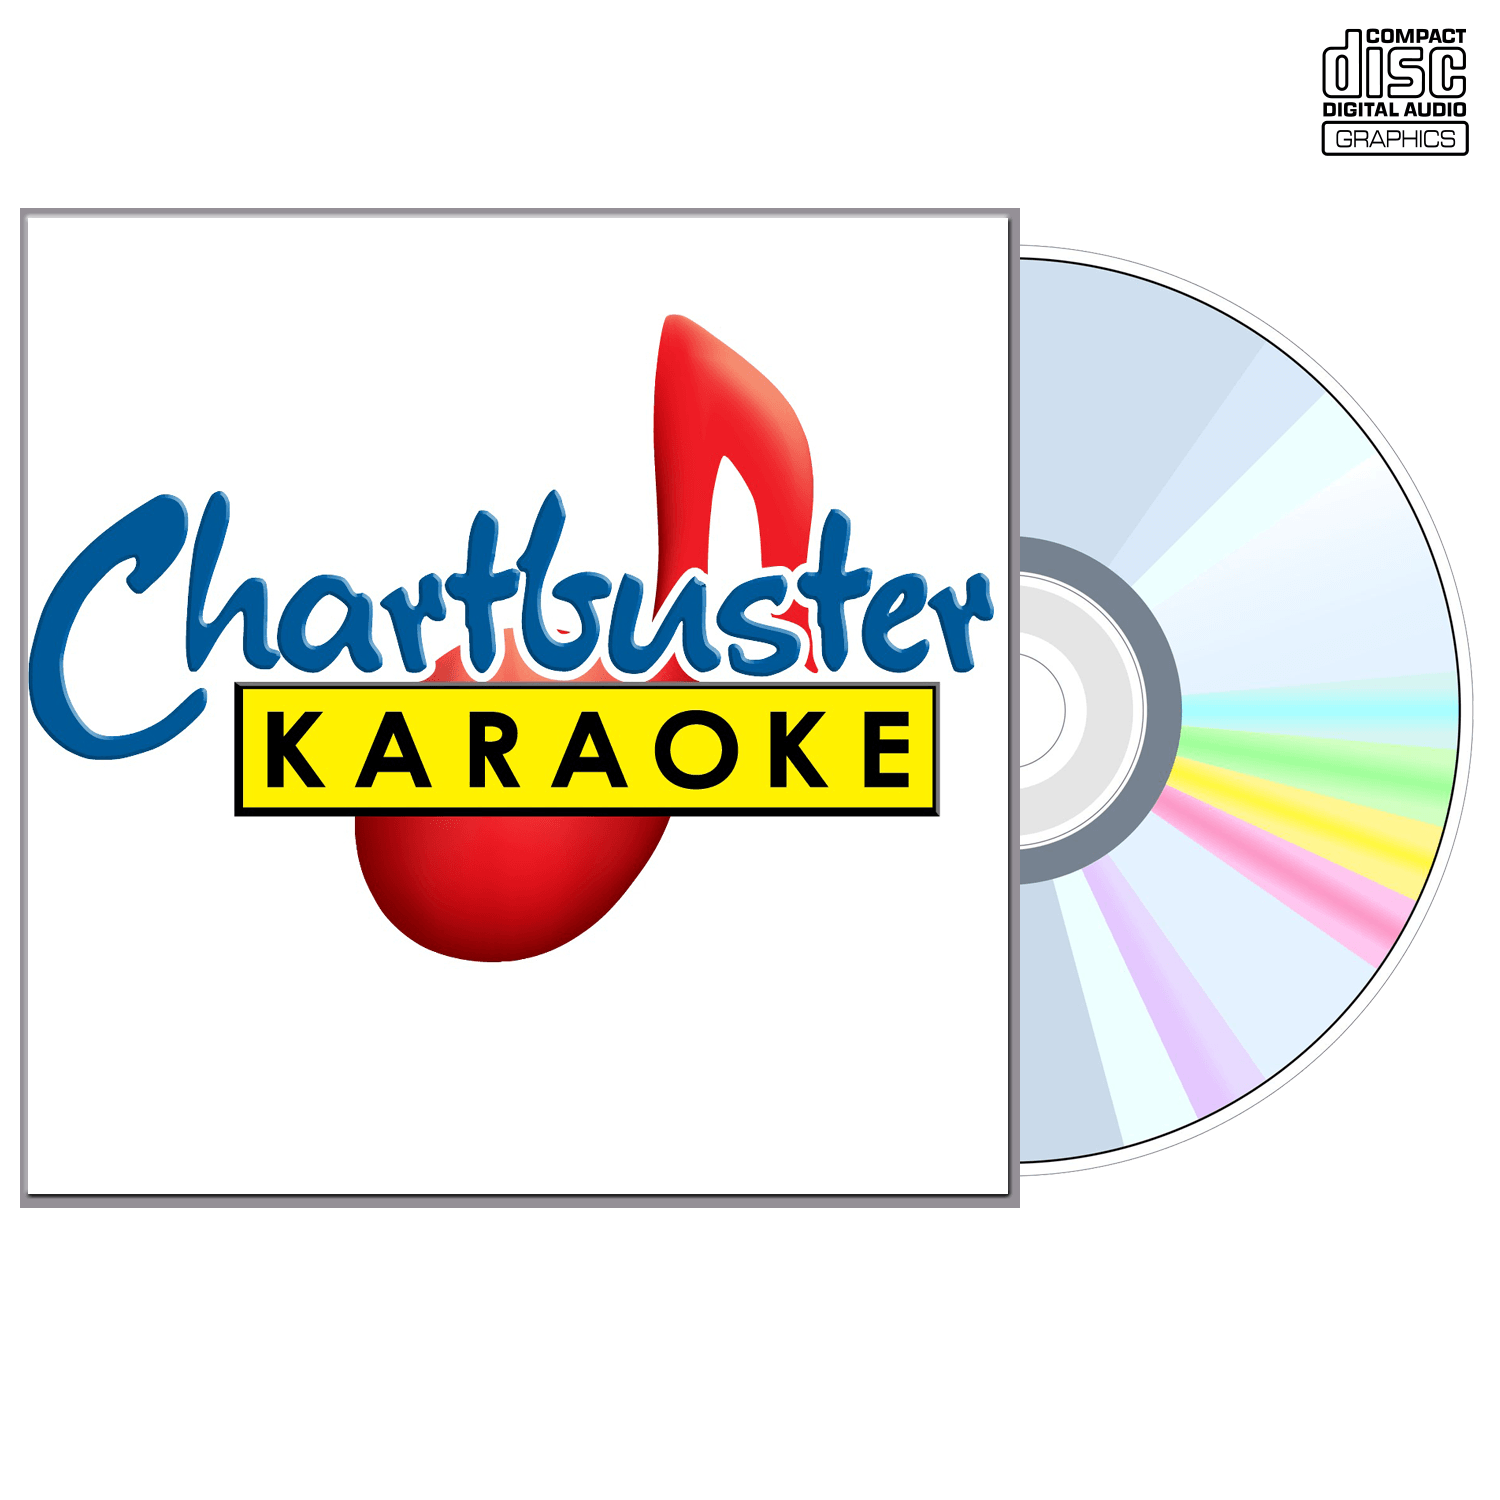 Tony Orlando,dawn - CD+G - Chartbuster Karaoke - Karaoke Home Entertainment